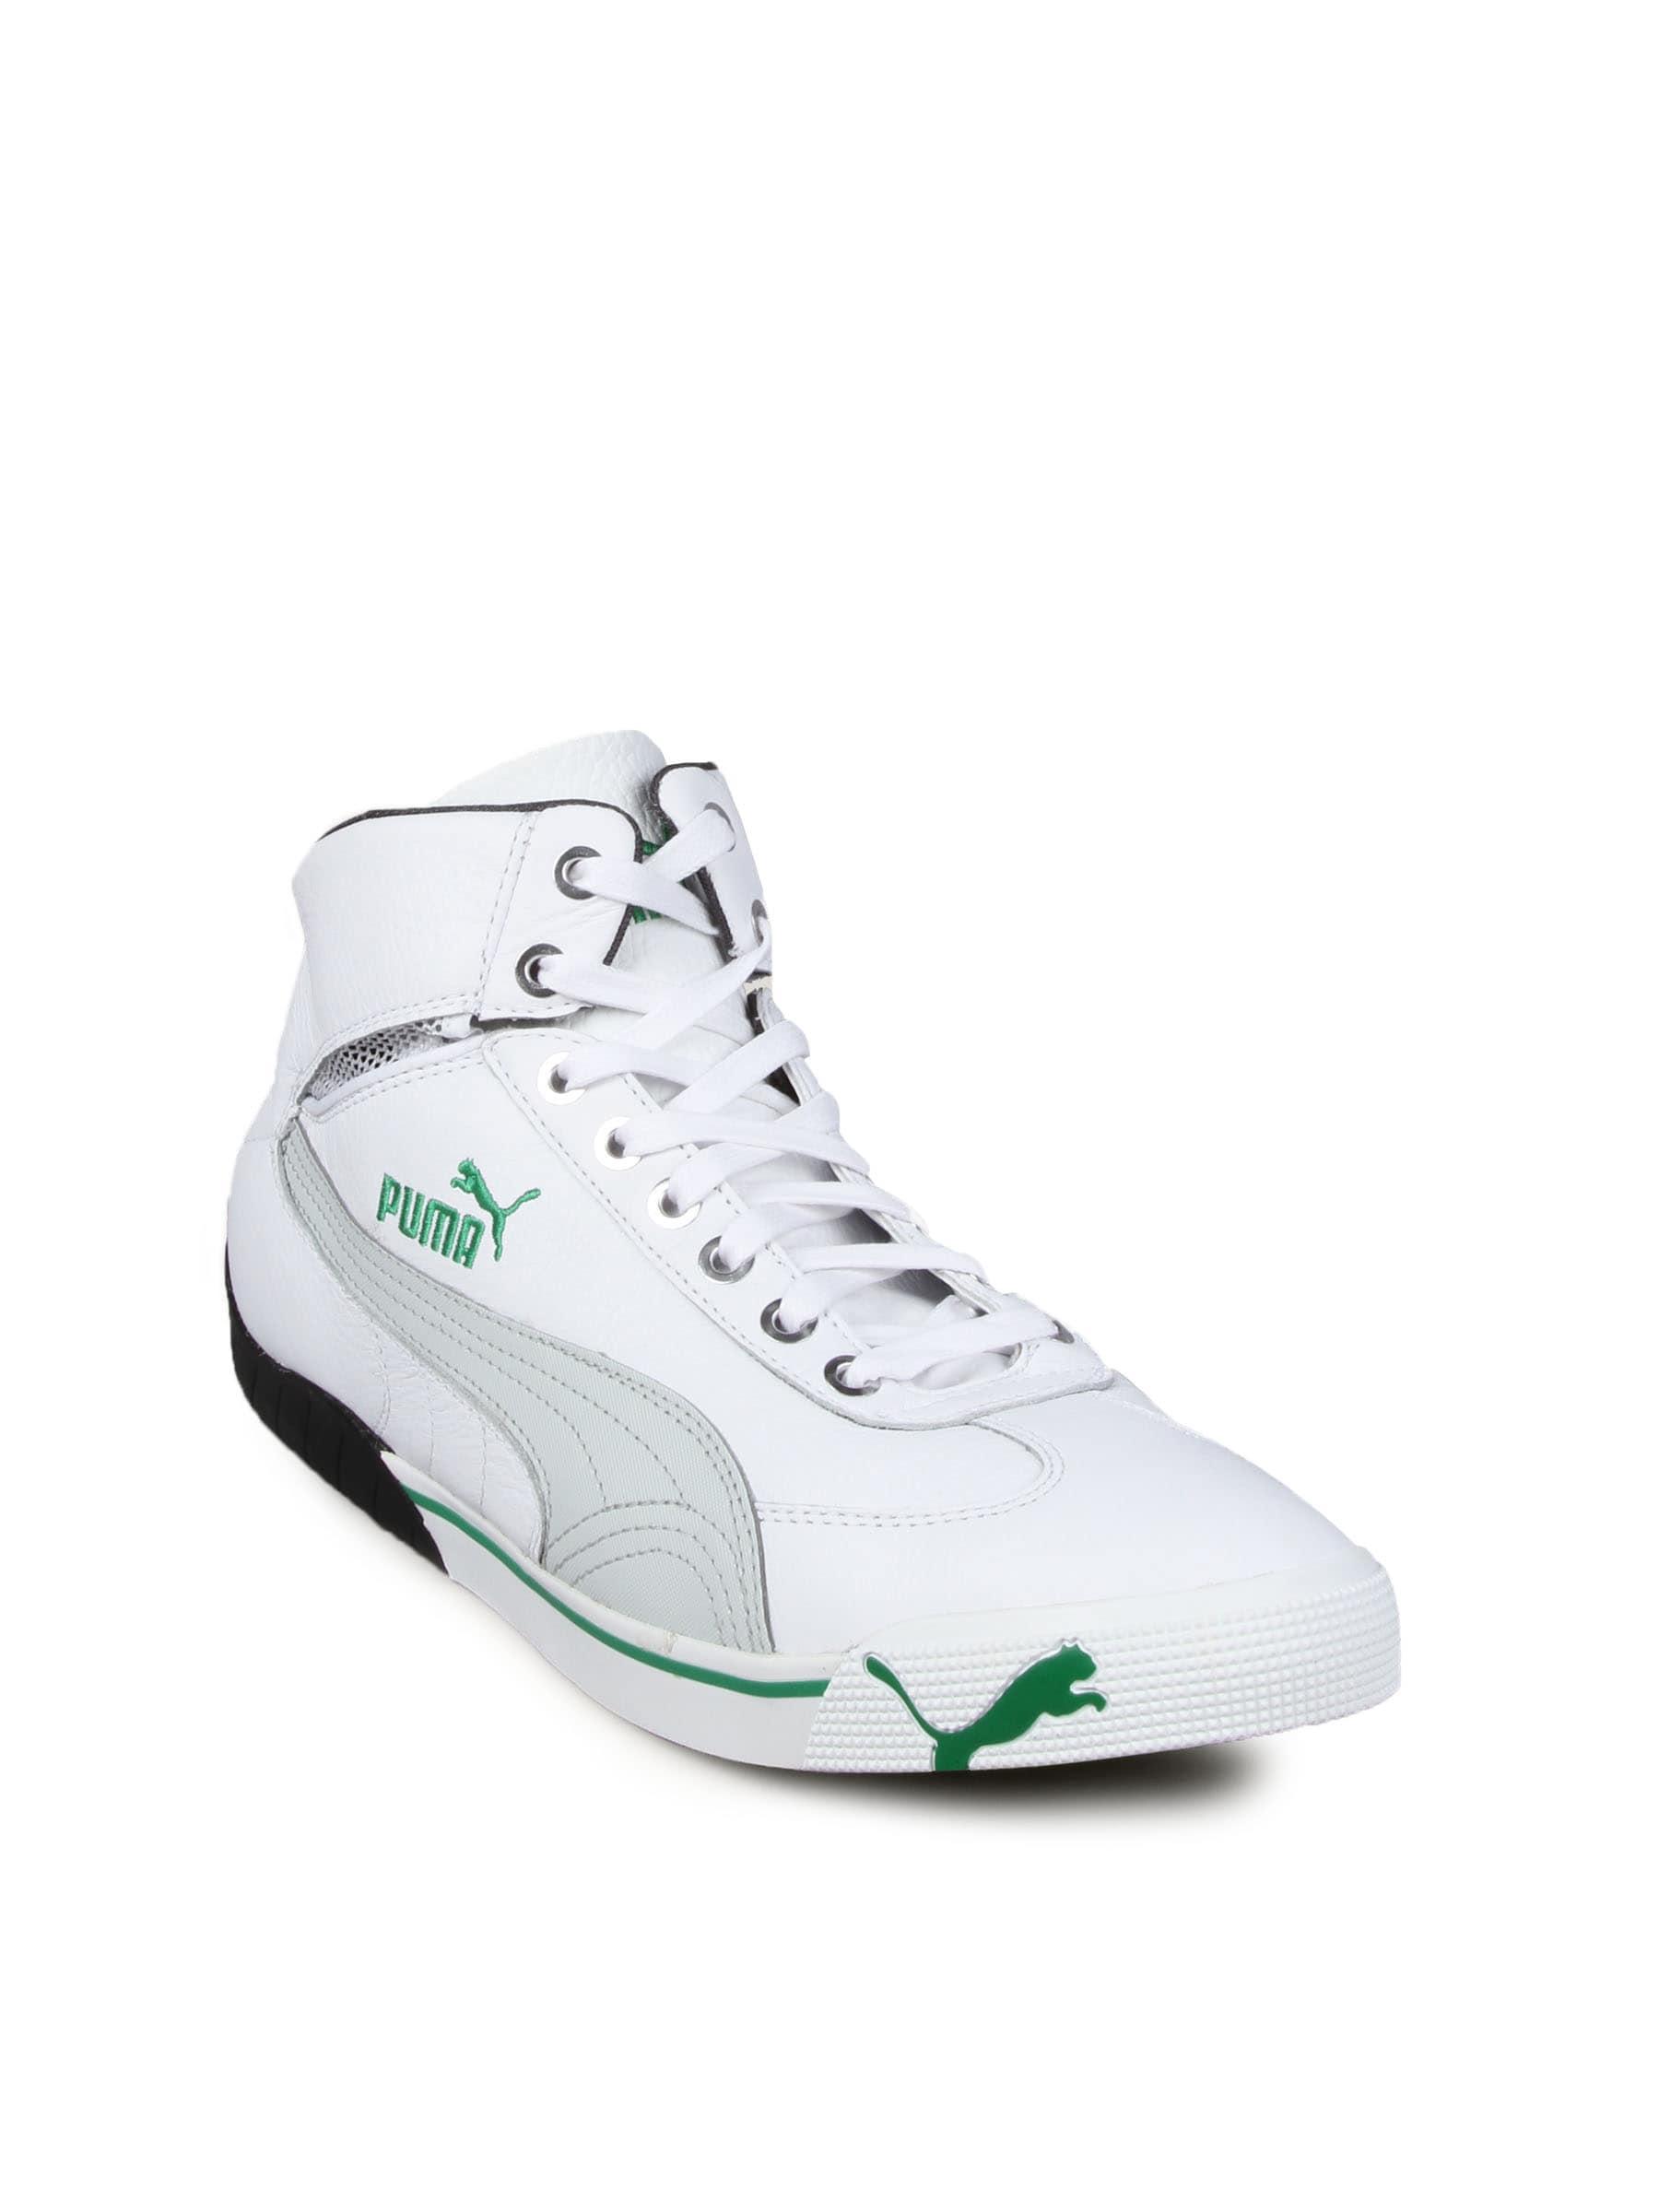 Puma Men's Speed Cat White Green Shoe